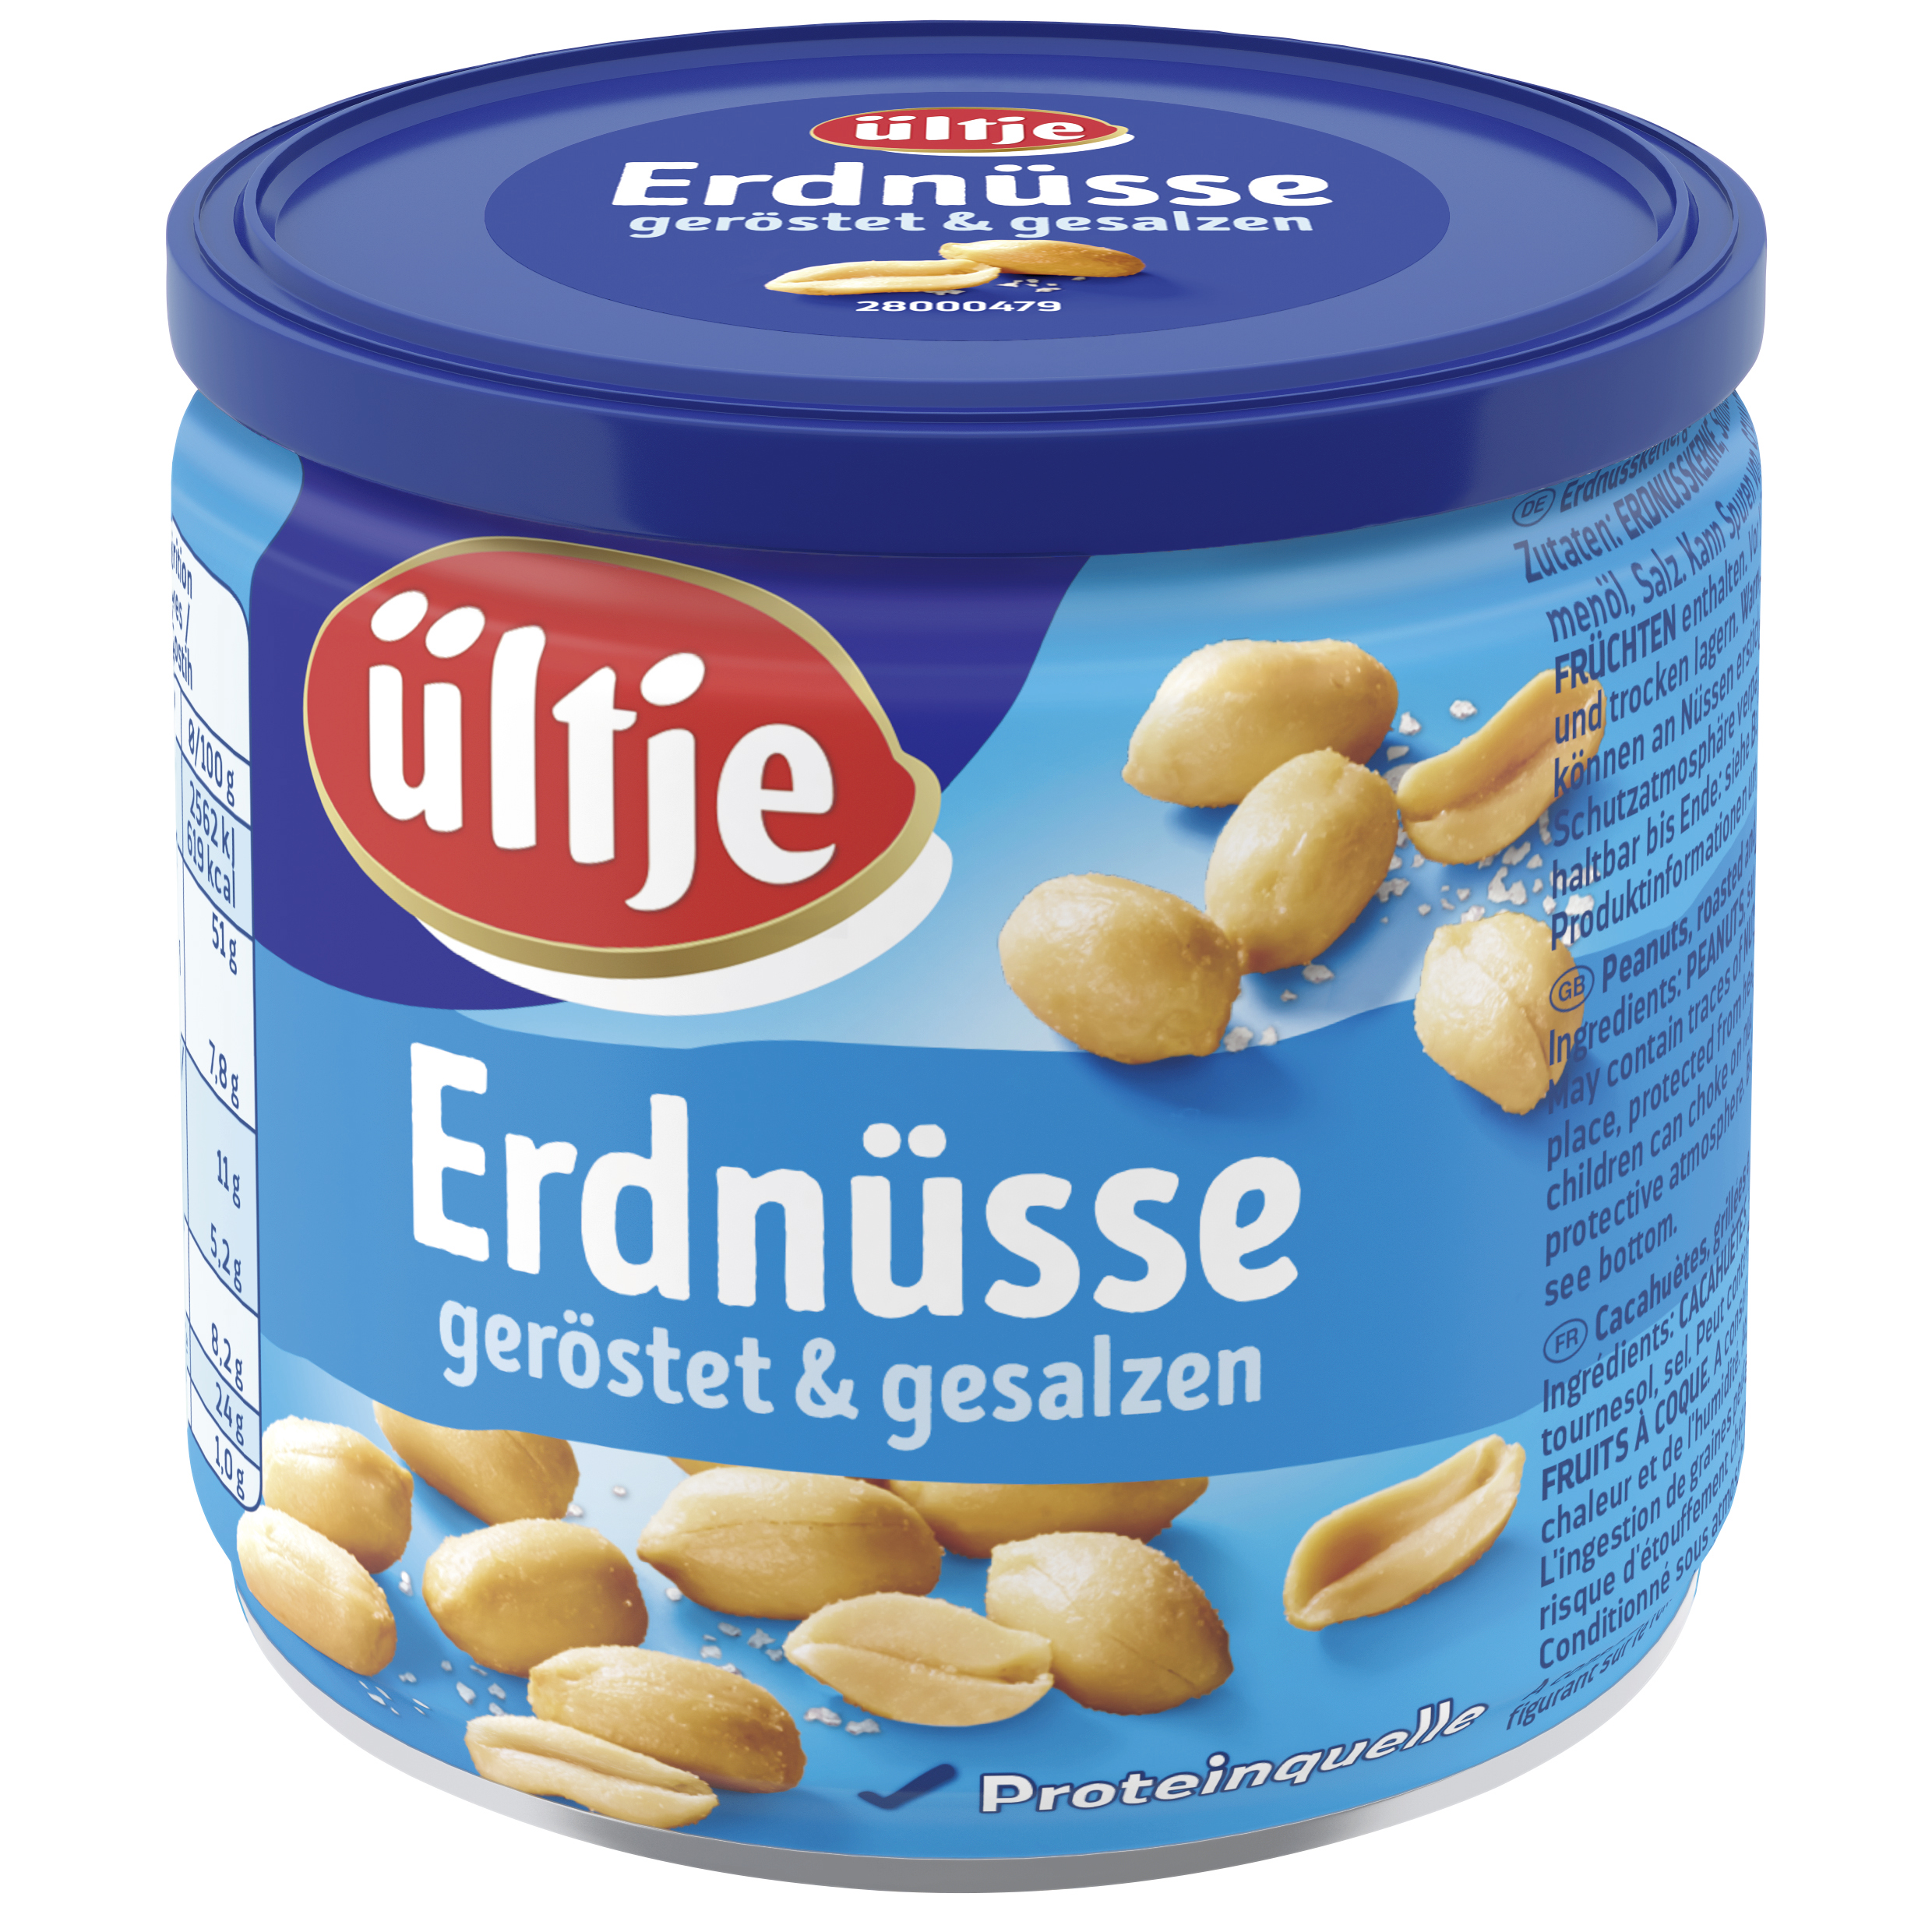 ültje Erdnüsse, geröstet & gesalzen, 180g Dose 